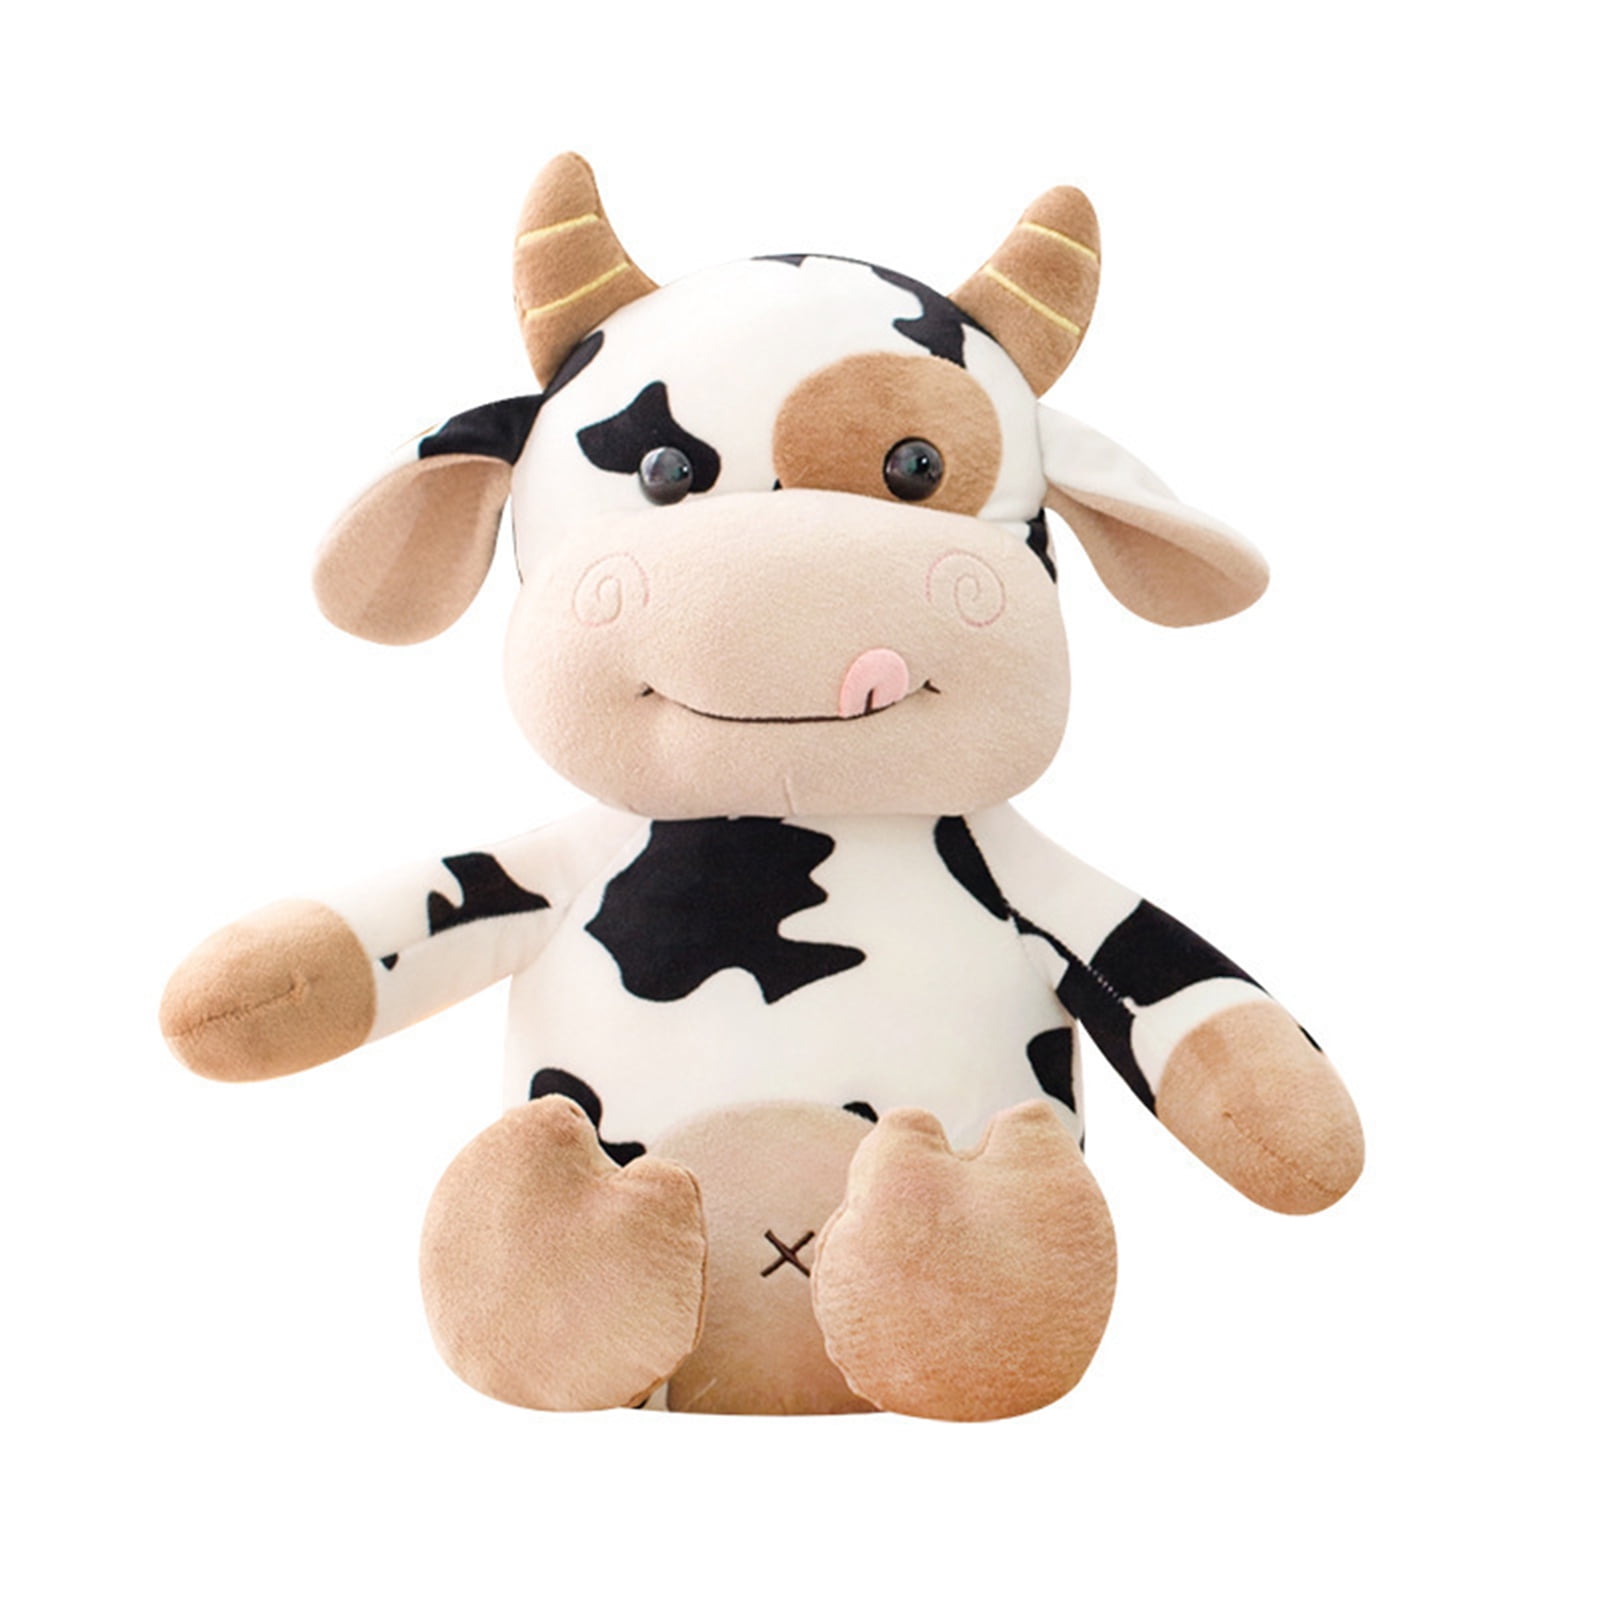 Playmaker Toys Flingshot Flying Cow White 1pcs for sale online 